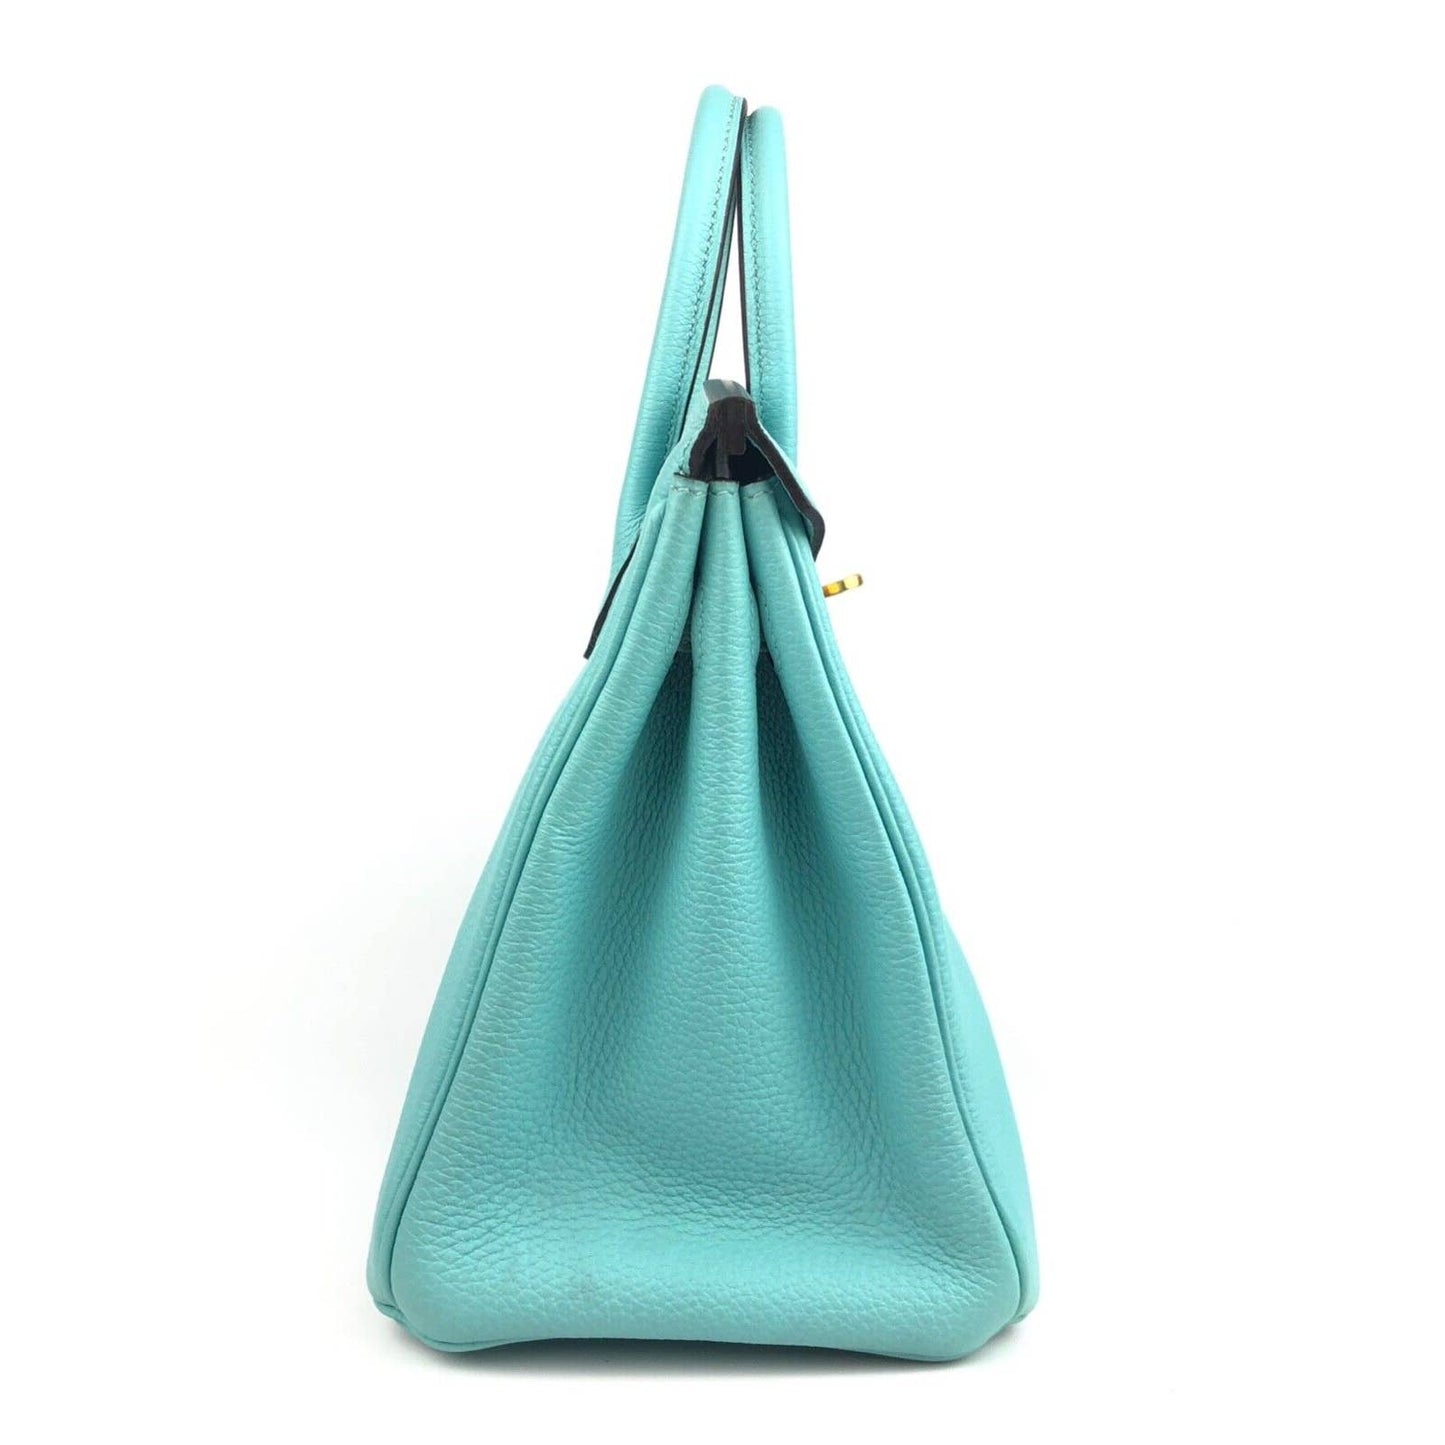 Hermes Birkin 25 Blue Atoll Tiffany Blue Togo Leather Gold Hardware Handbag Bag